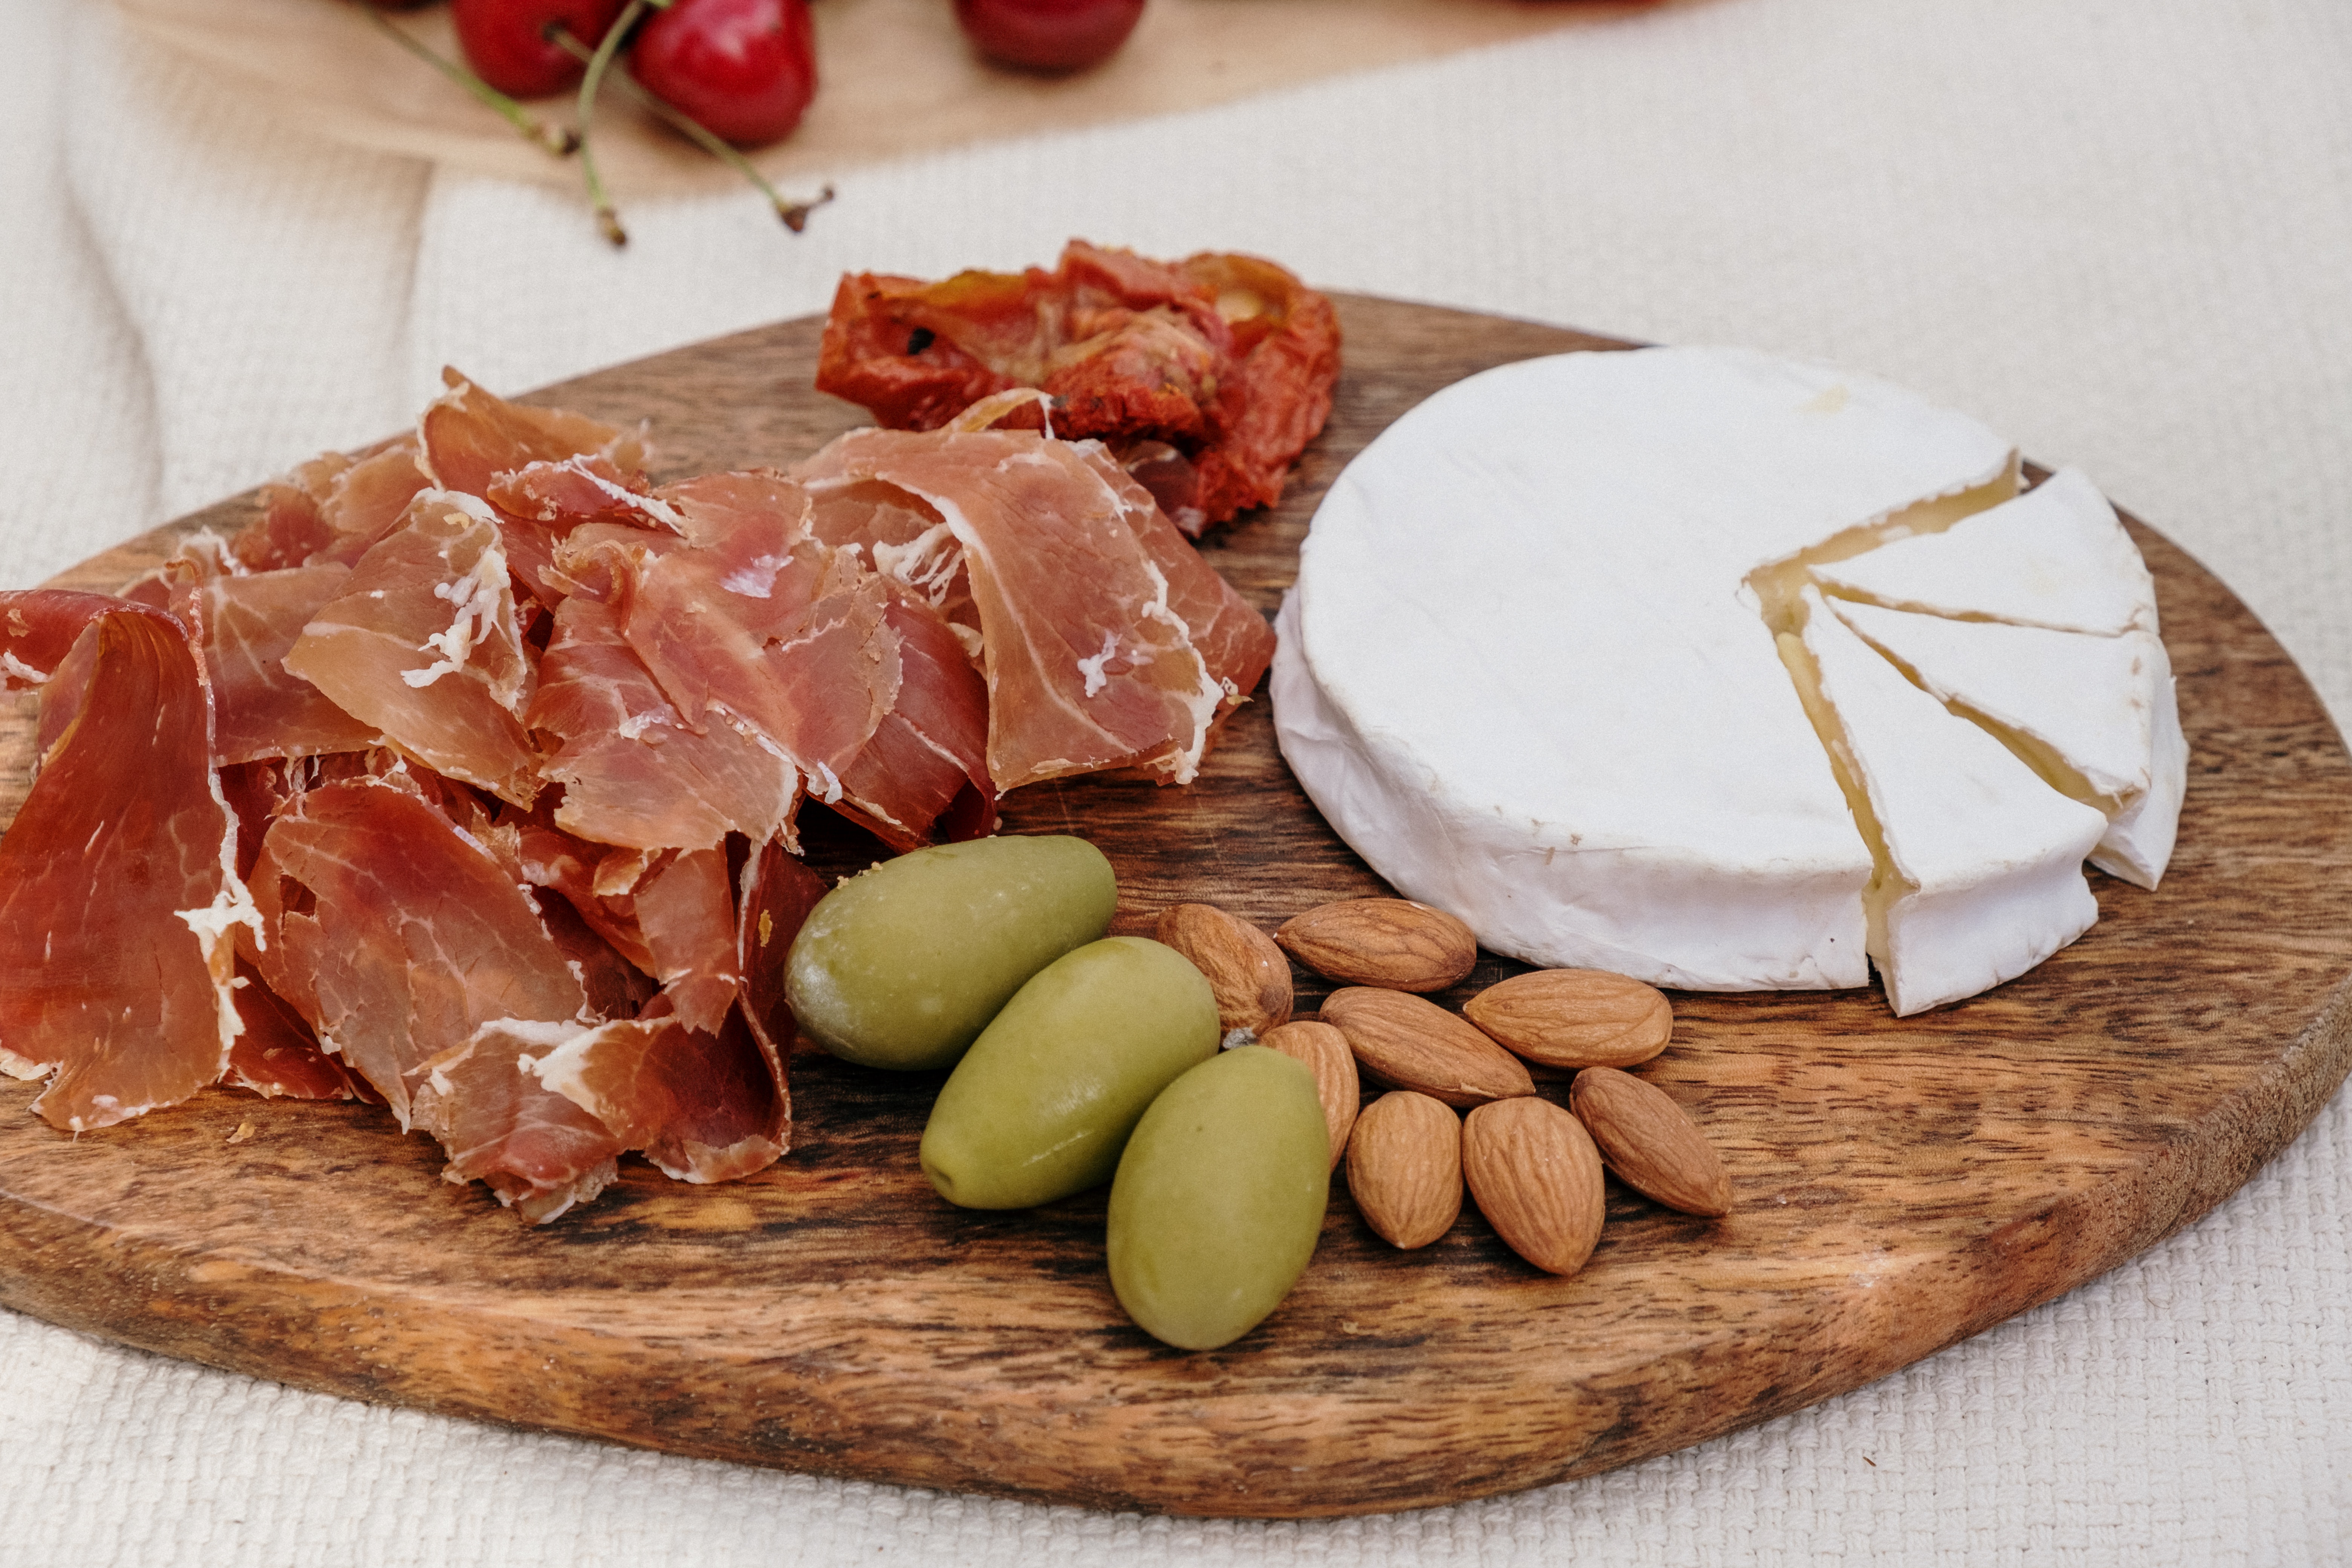 Hegedűs-Hús develops hog feed for Iberian-style ham